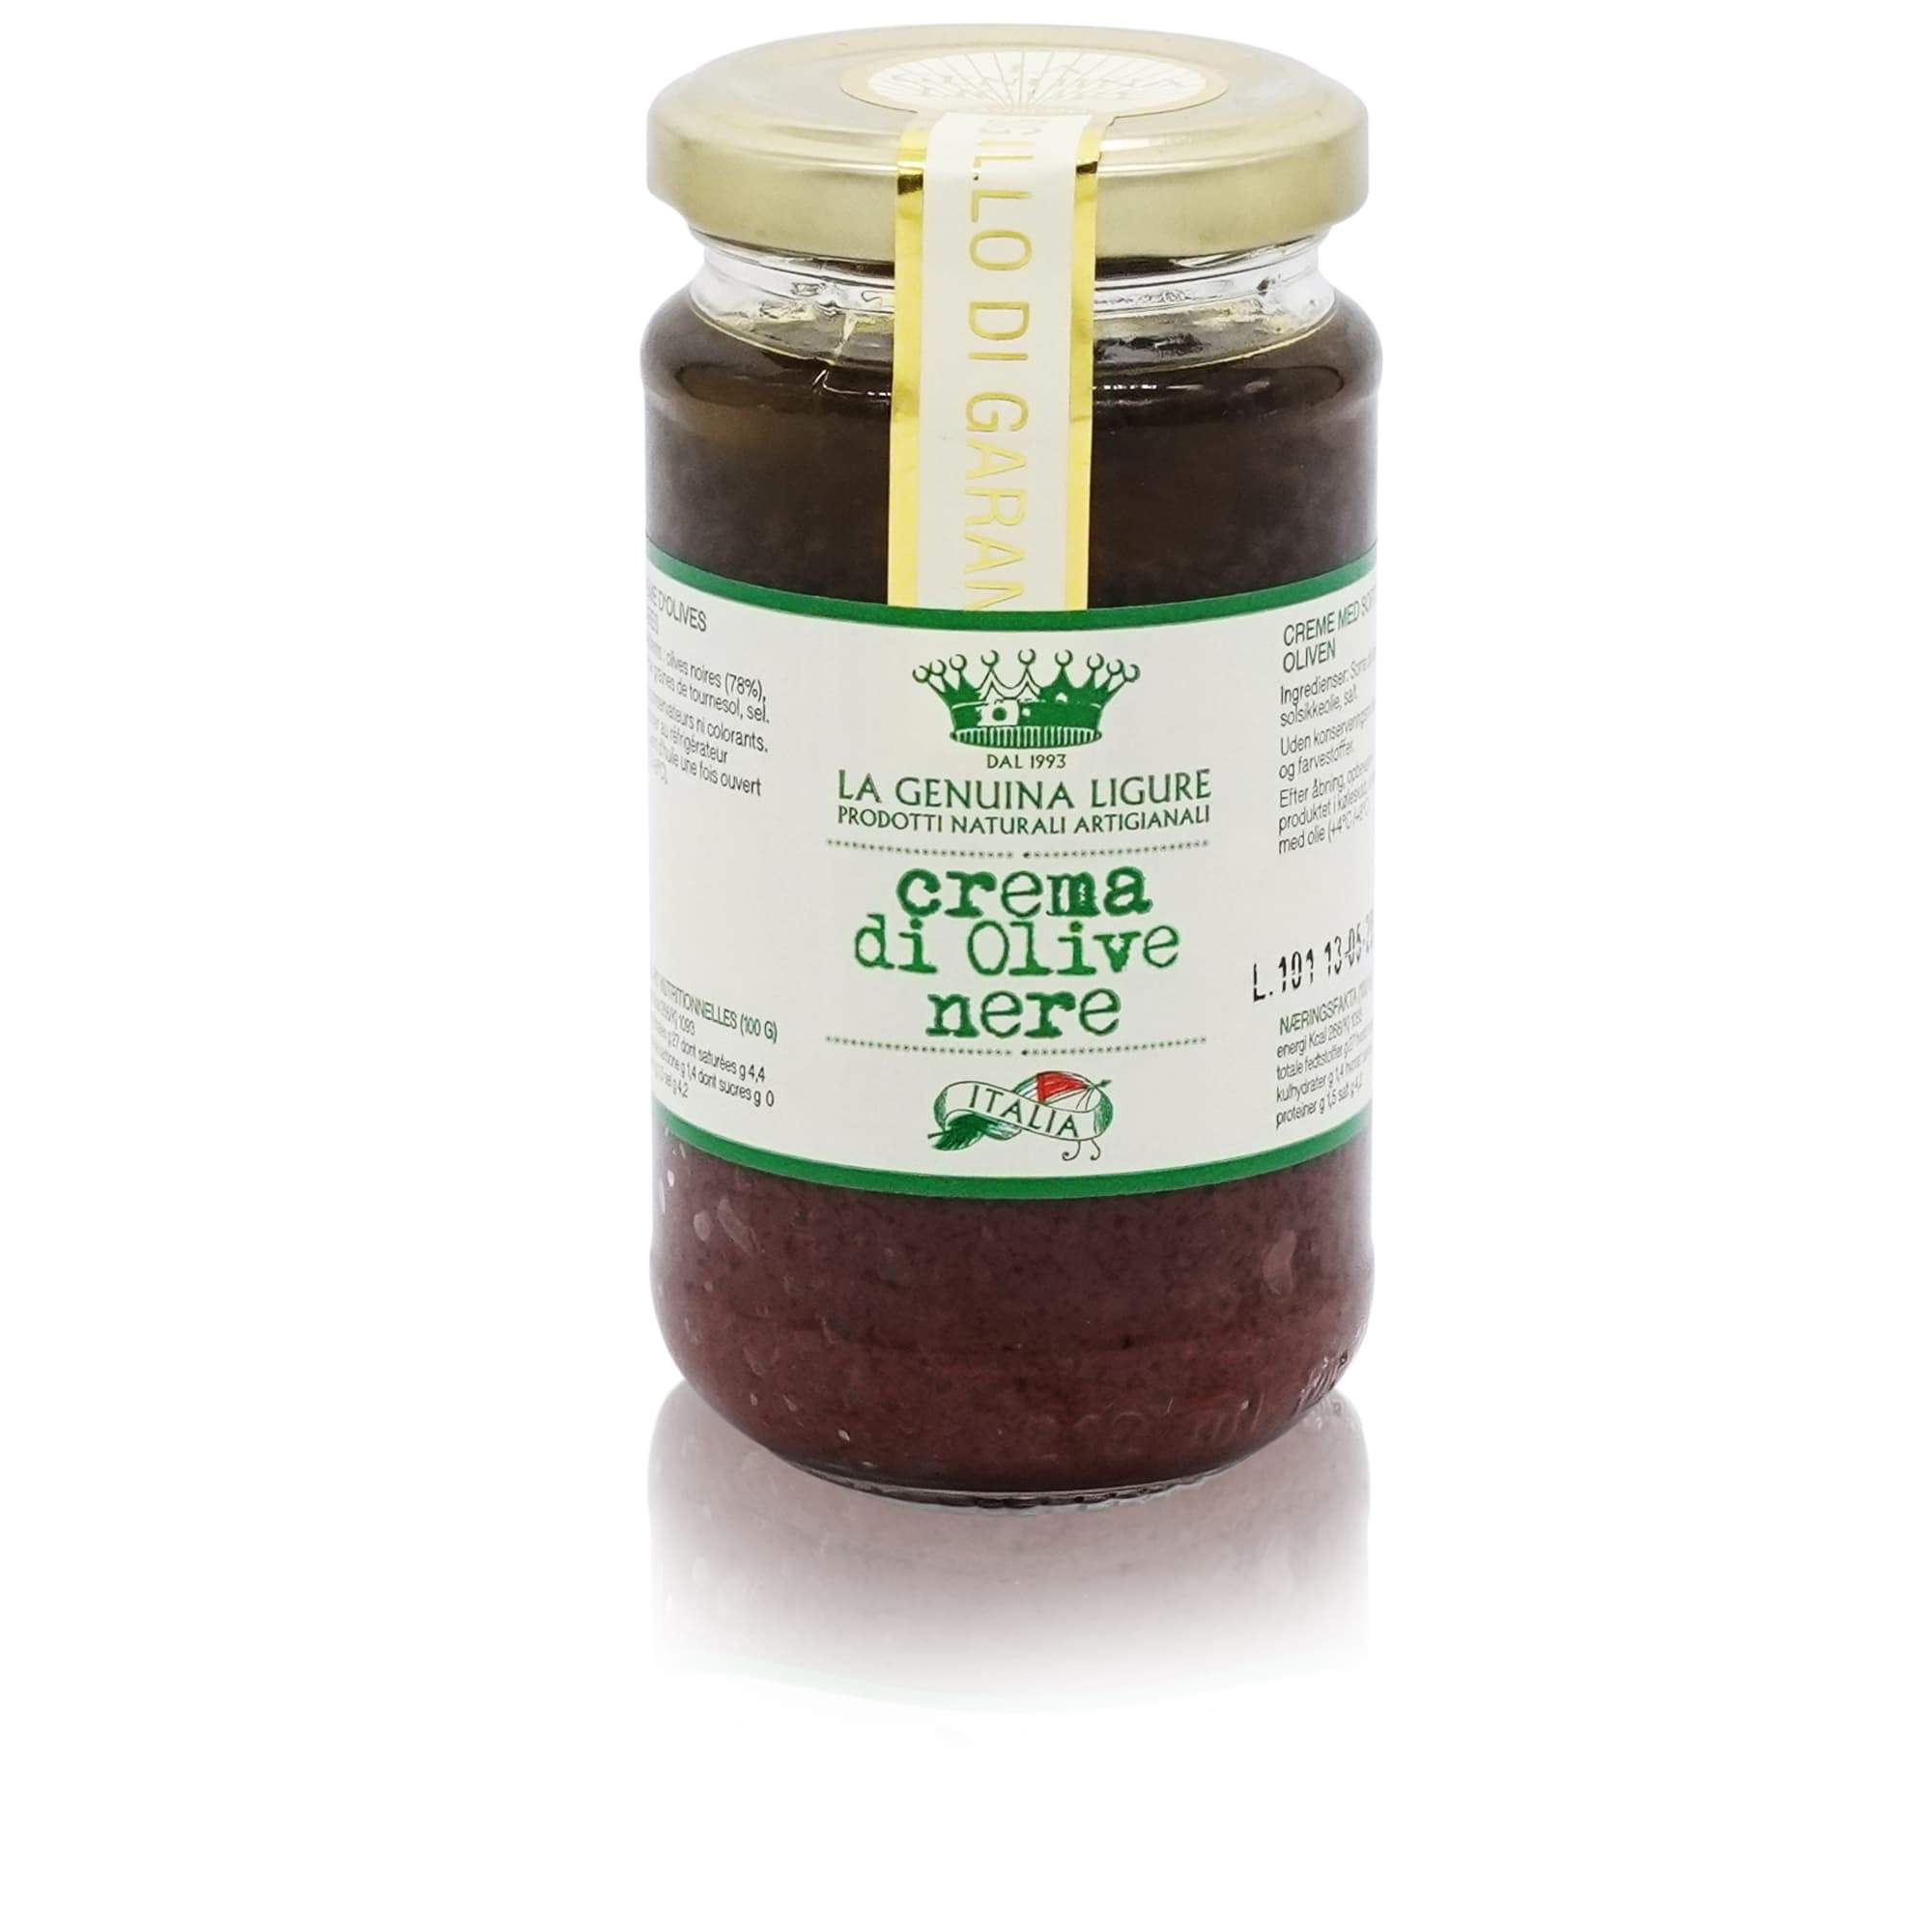 La Genuina Ligure Crema di Olive neri – Olivencreme - 0,18kg